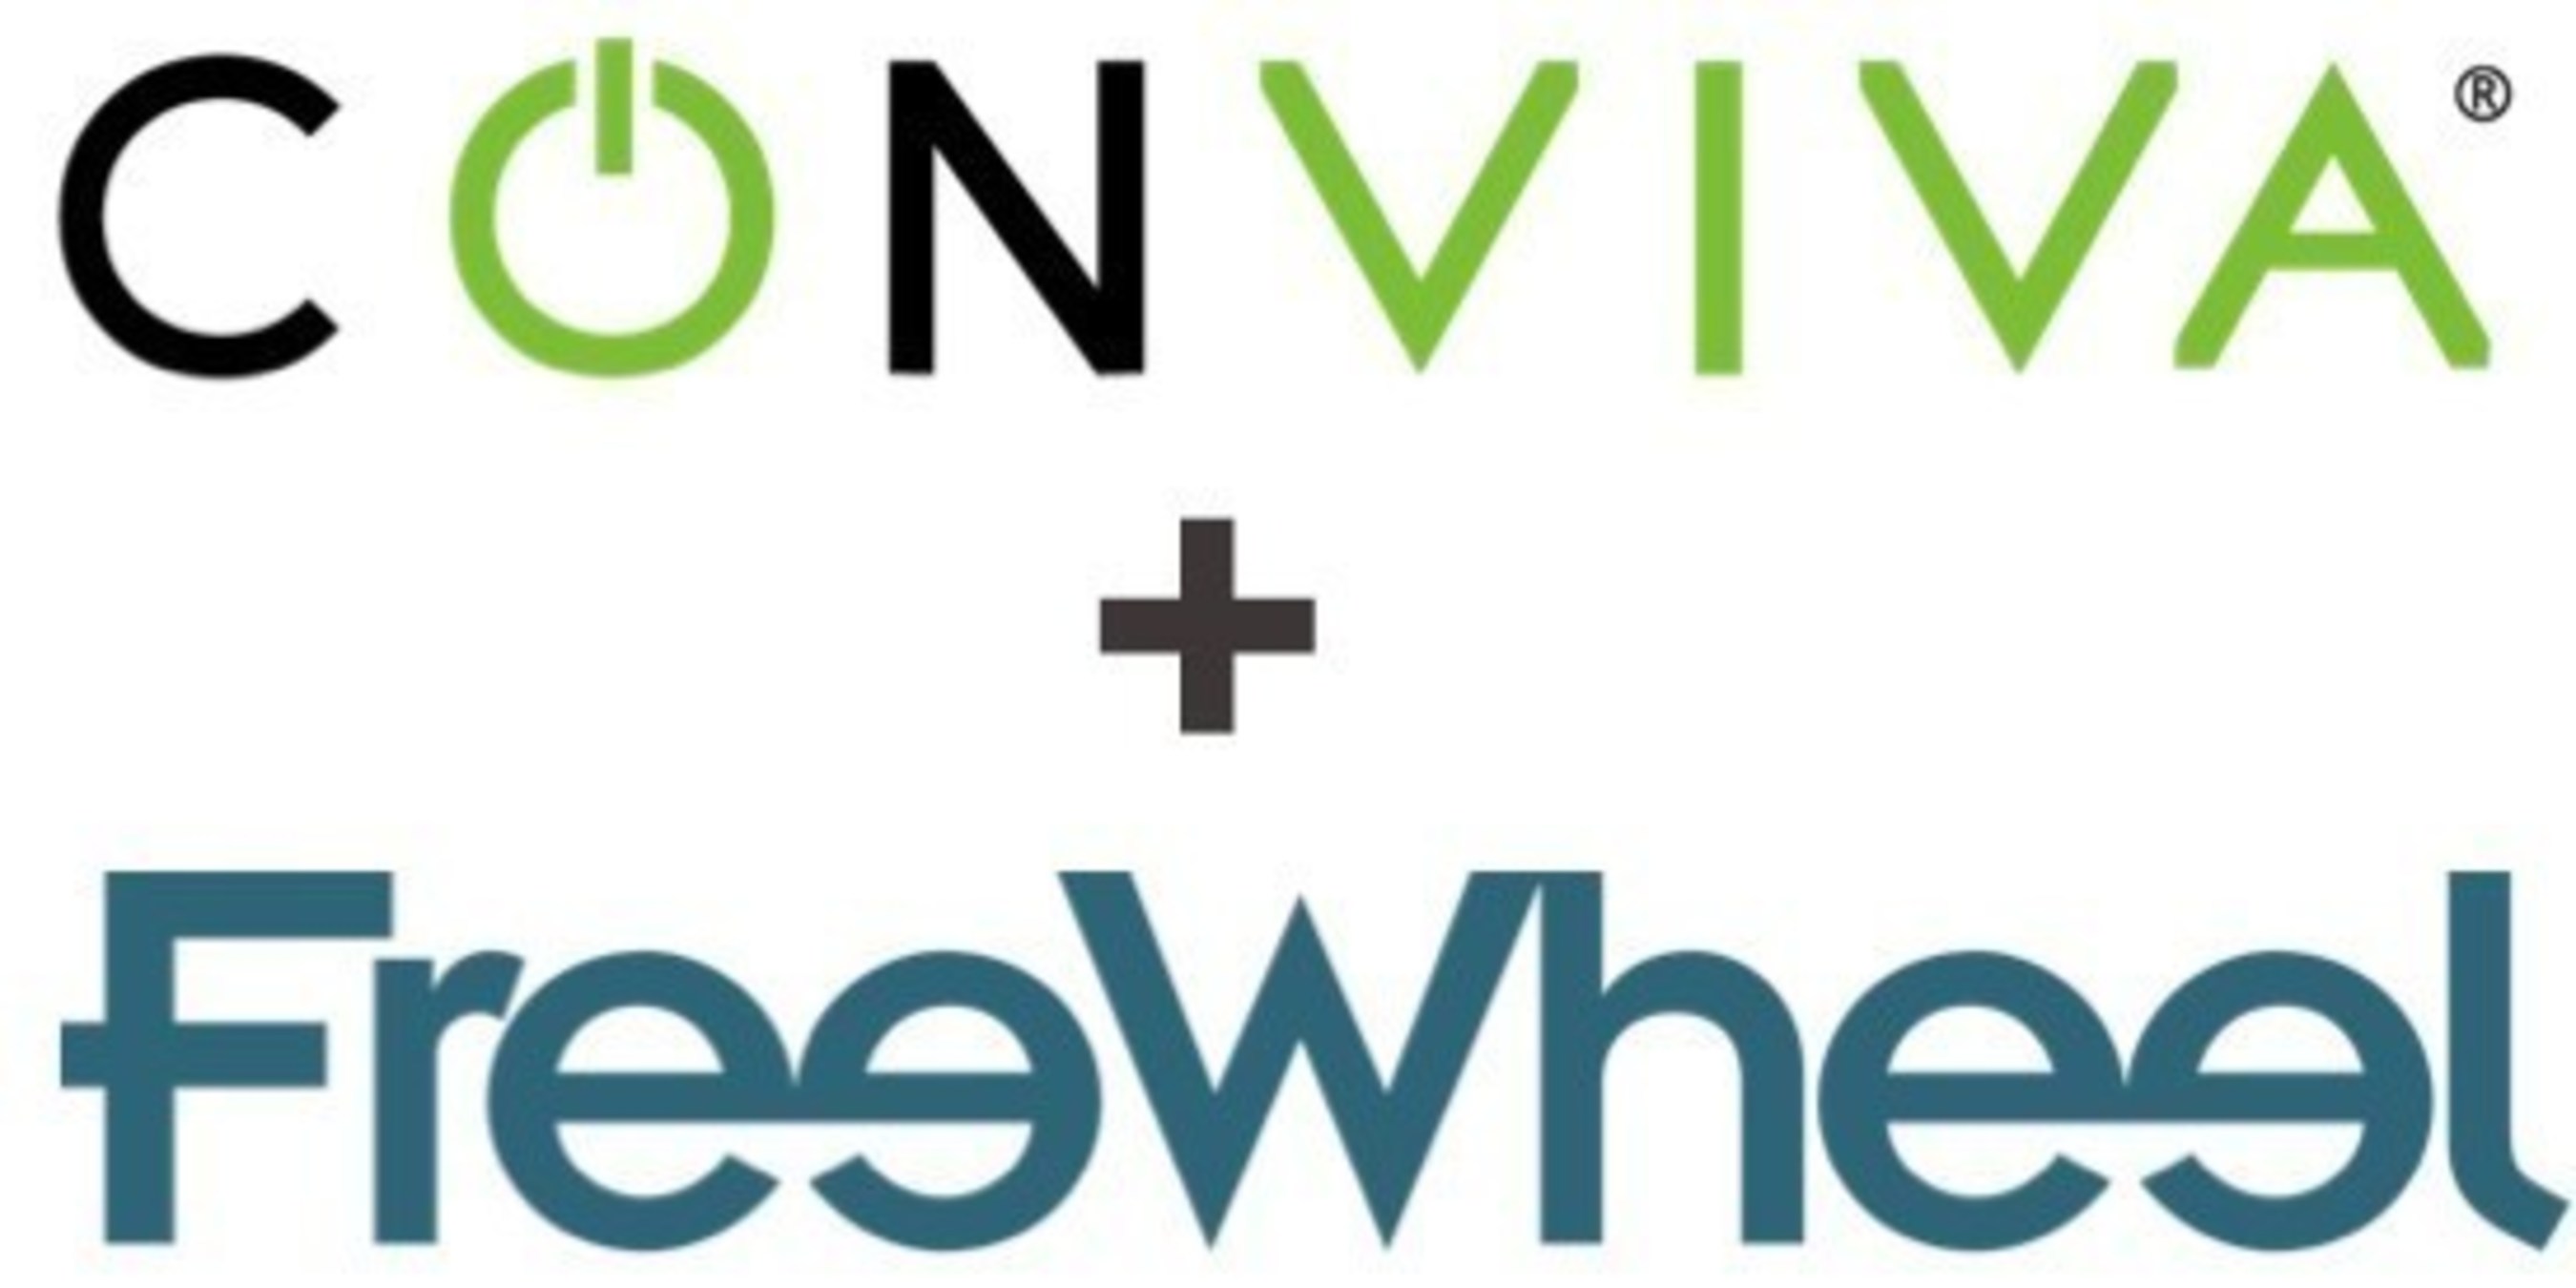 Conviva and FreeWheel Expand Advertising Analytics through Strategic Partnership